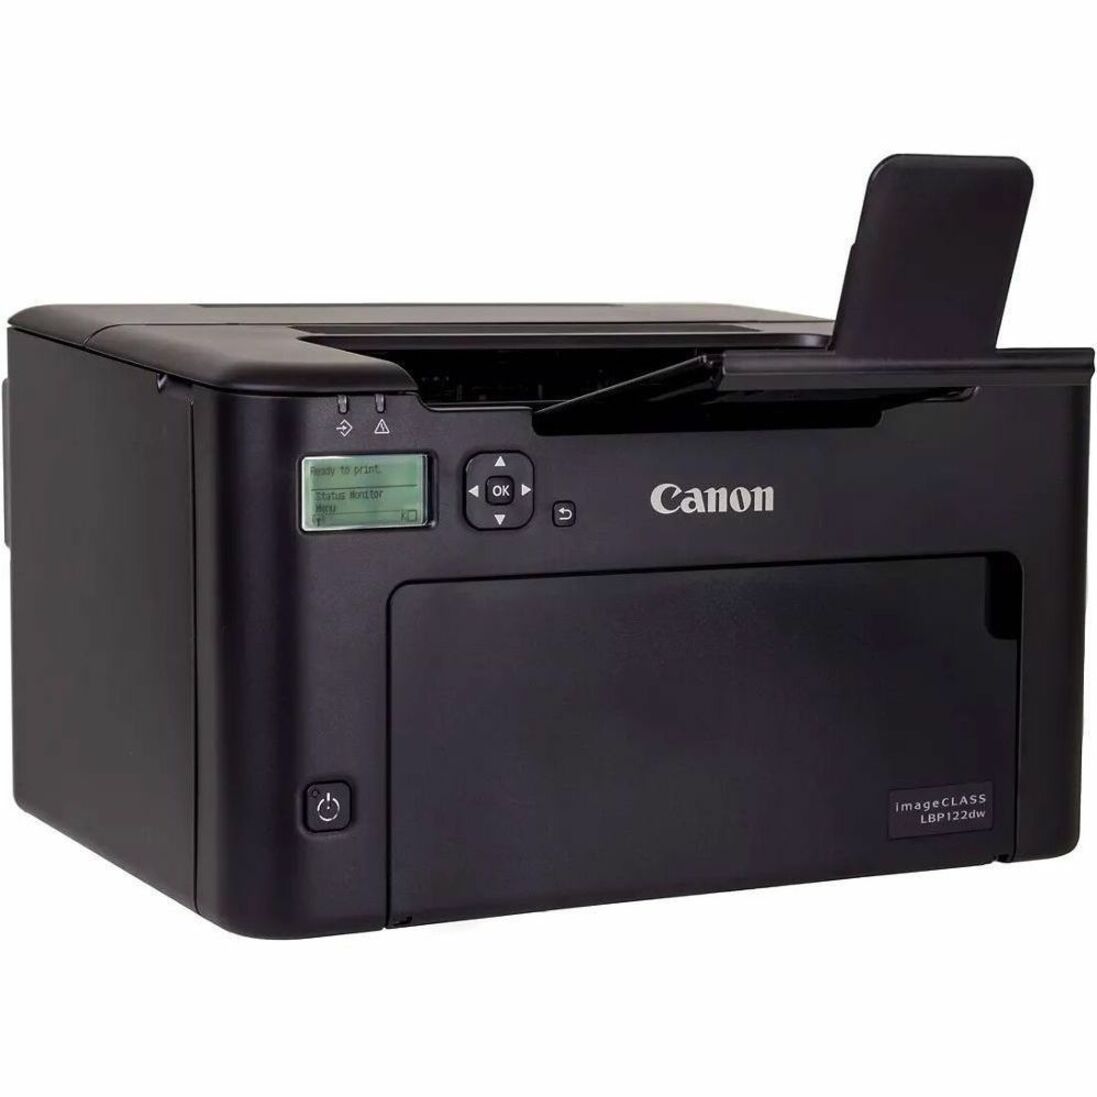 Canon 5620C006 imageCLASS LBP122dw Stampante Laser Wireless Duplex Monocromatica 30 ppm 600 x 600 dpi